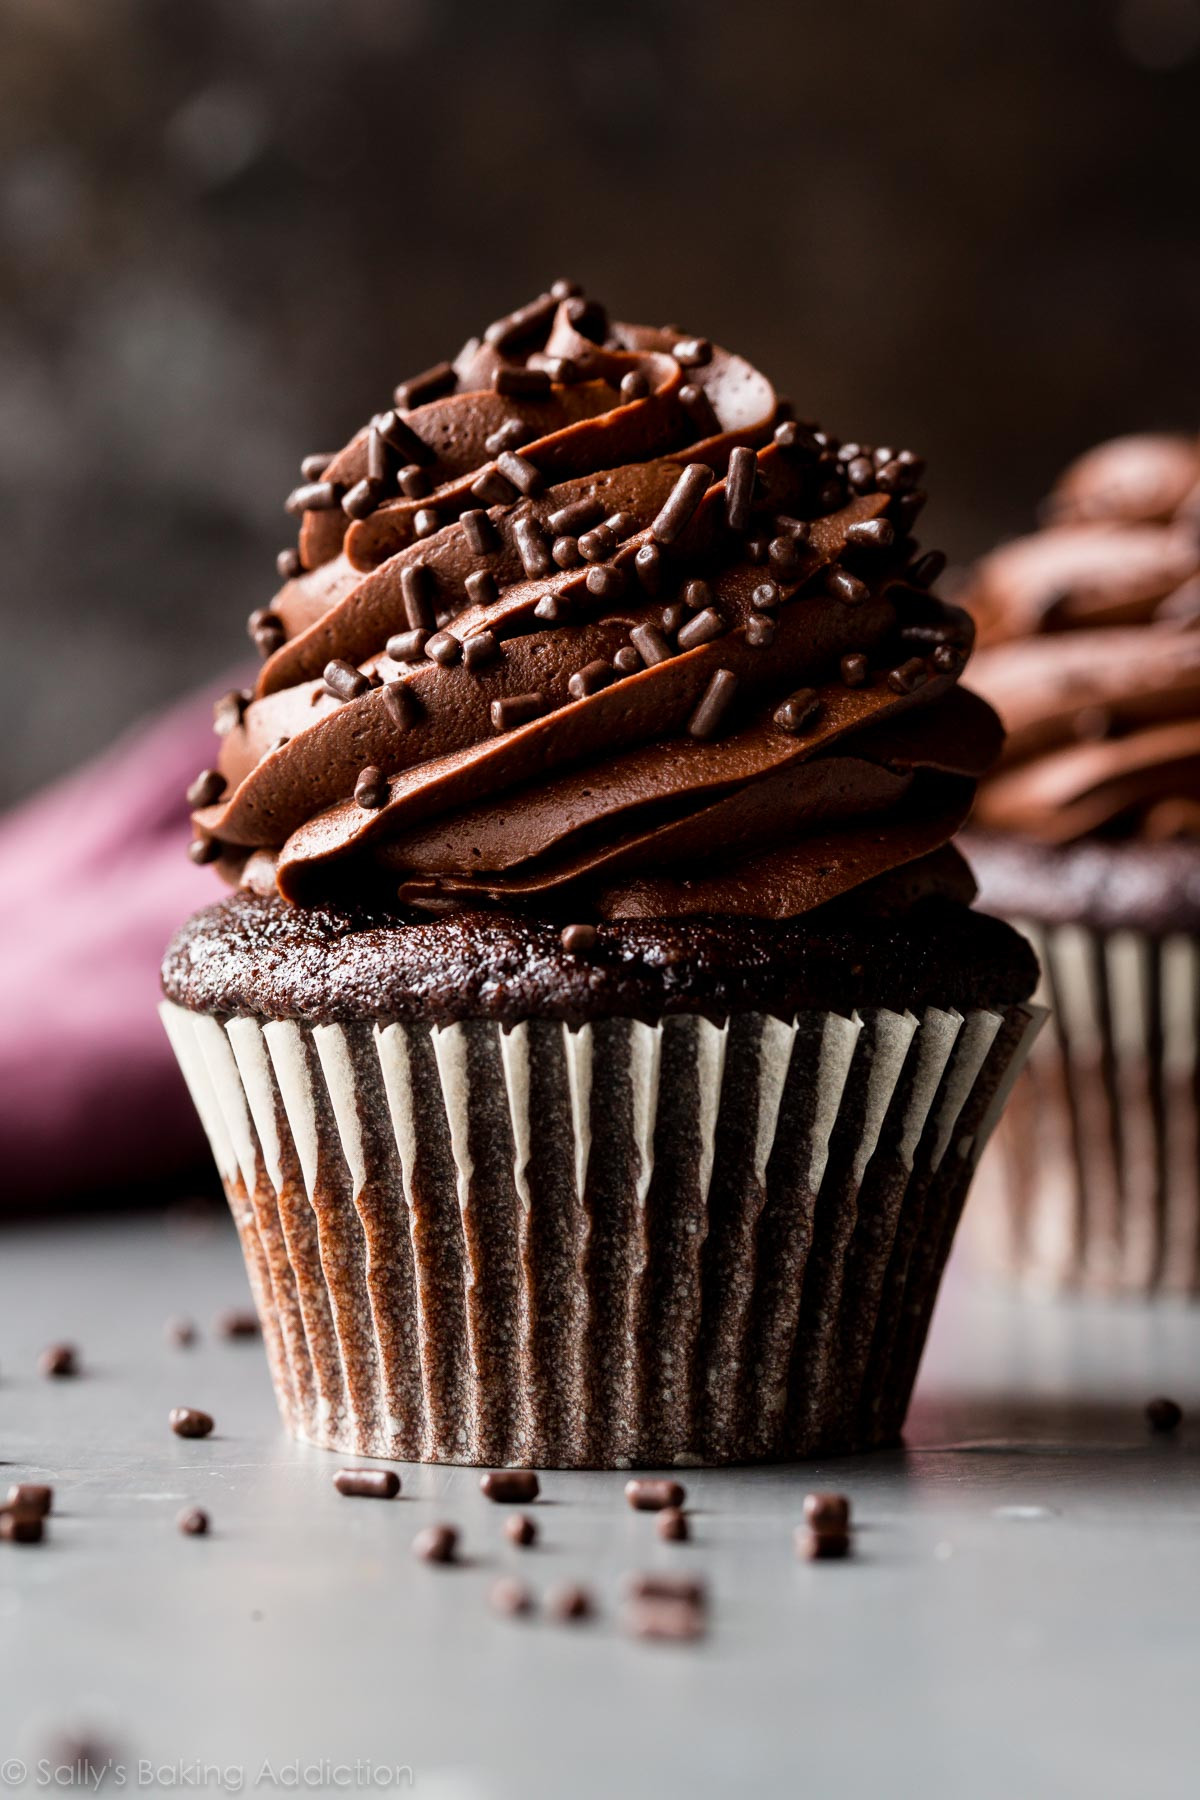 How To Make Chocolate Cupcakes Super Moist Chocolate Cupcakes Sallys Baking Addiction